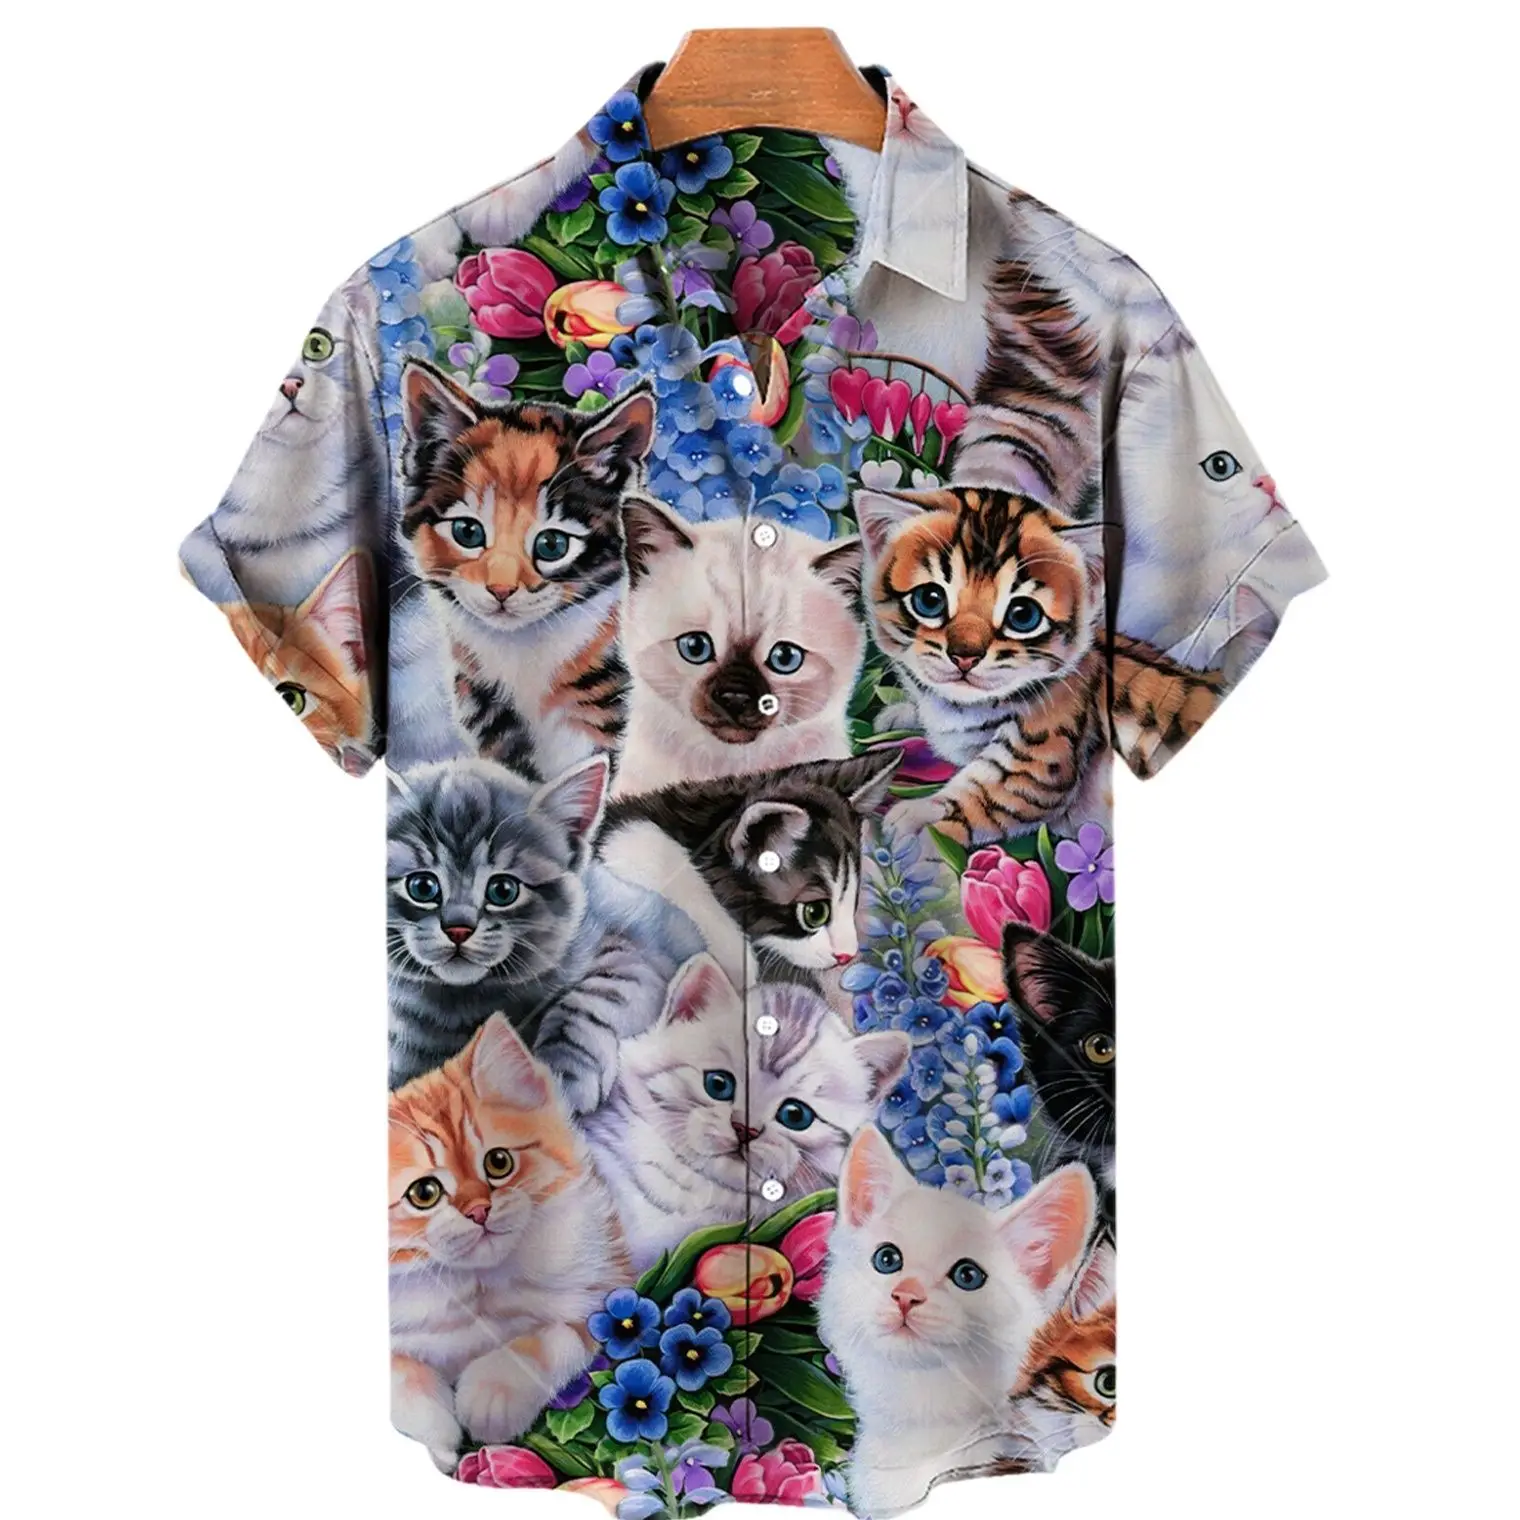 Micro-bomb Shirt Summer Anime Cat Print Shirt Cartoon Breathable Hawaiian Shirt Fashion Fun Short-sleeved European Size 5xl Top